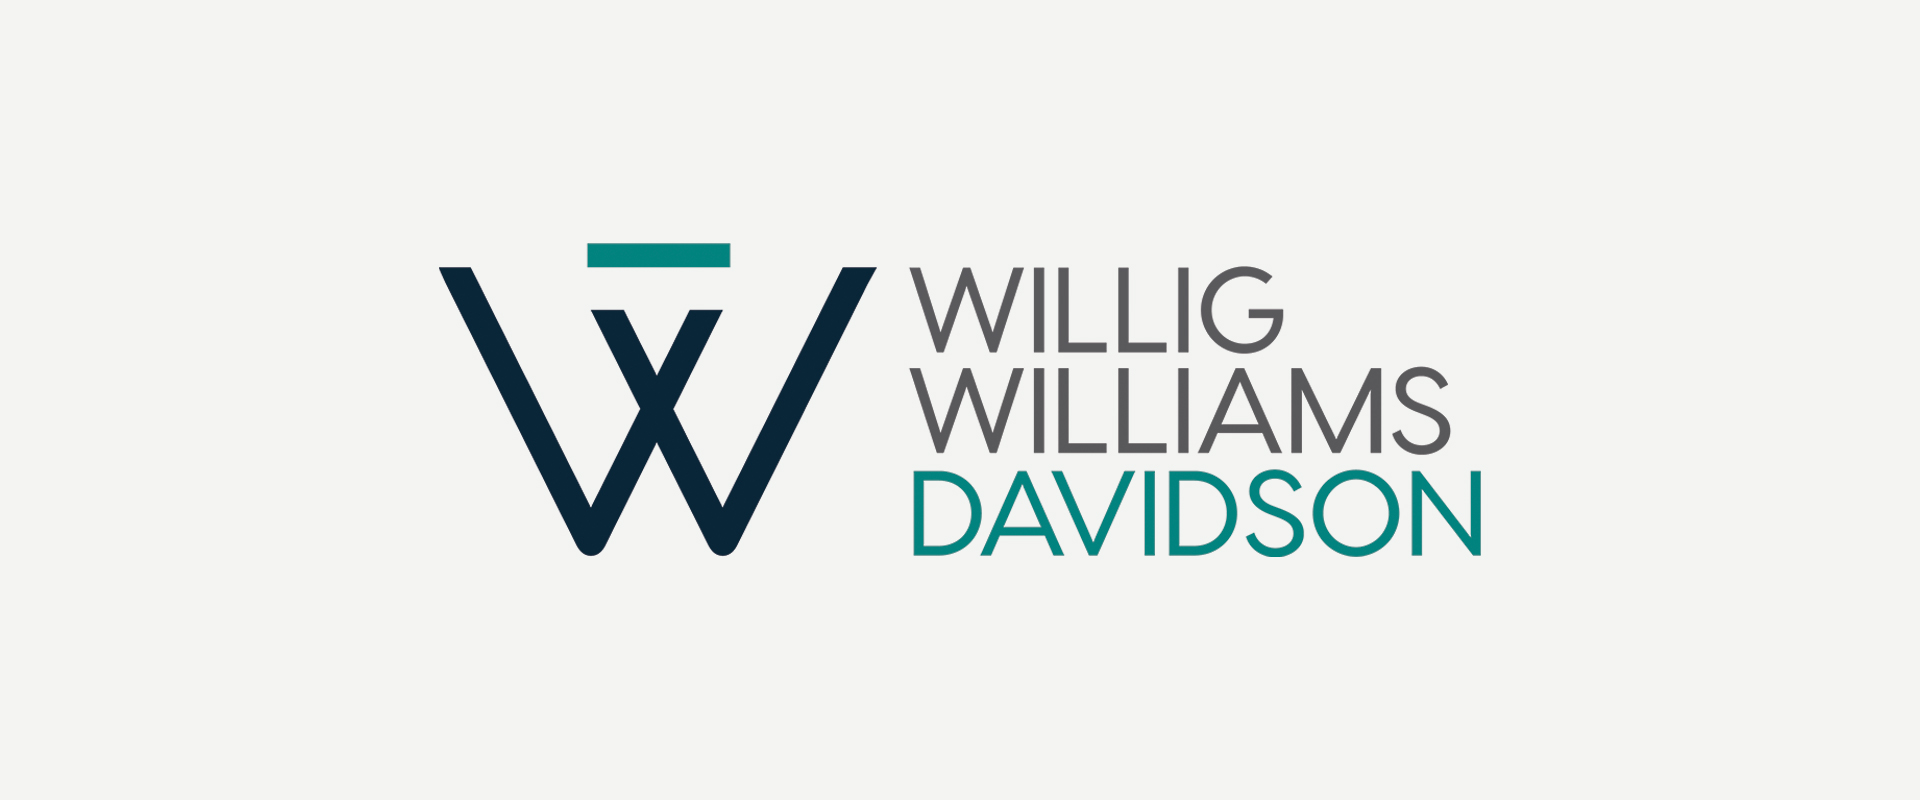 Media item displaying Willig, Williams & Davidson